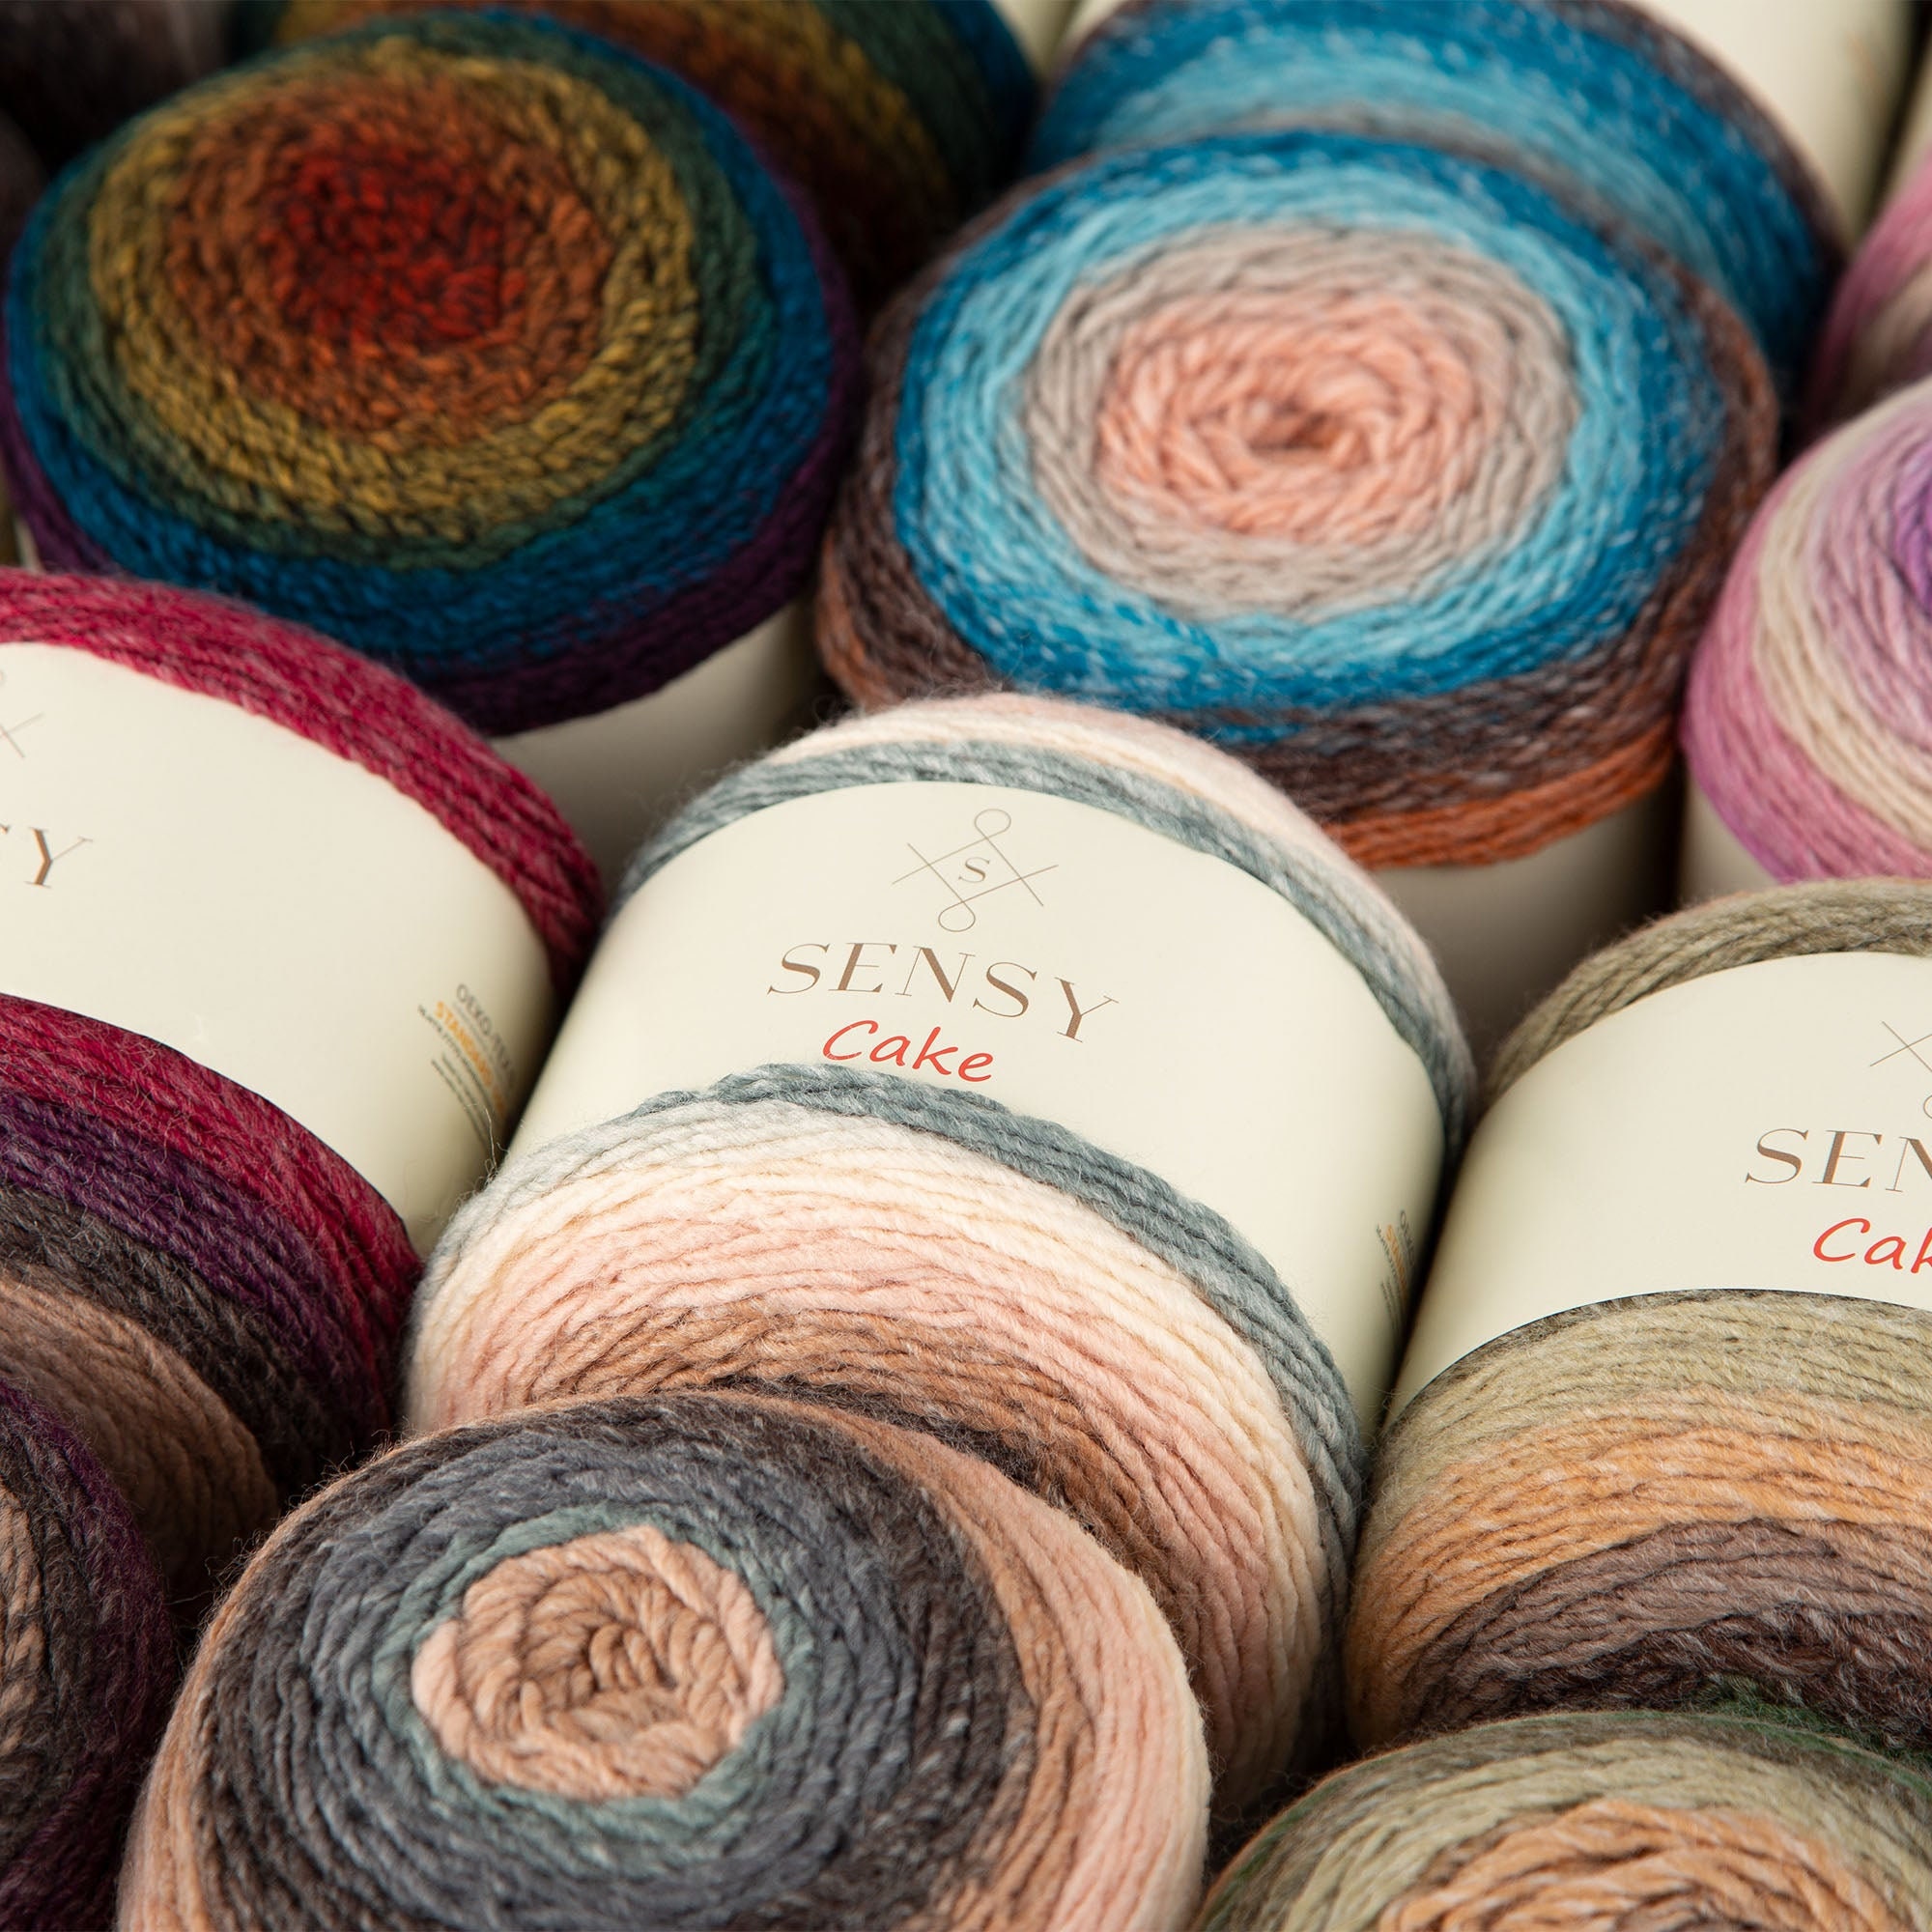 Sensy Cake Yarn, 5.3 Oz, 525 Yards, Multicolor Yarn for Crocheting and  Knitting, Craft Yarn, Gauge 3 Light 